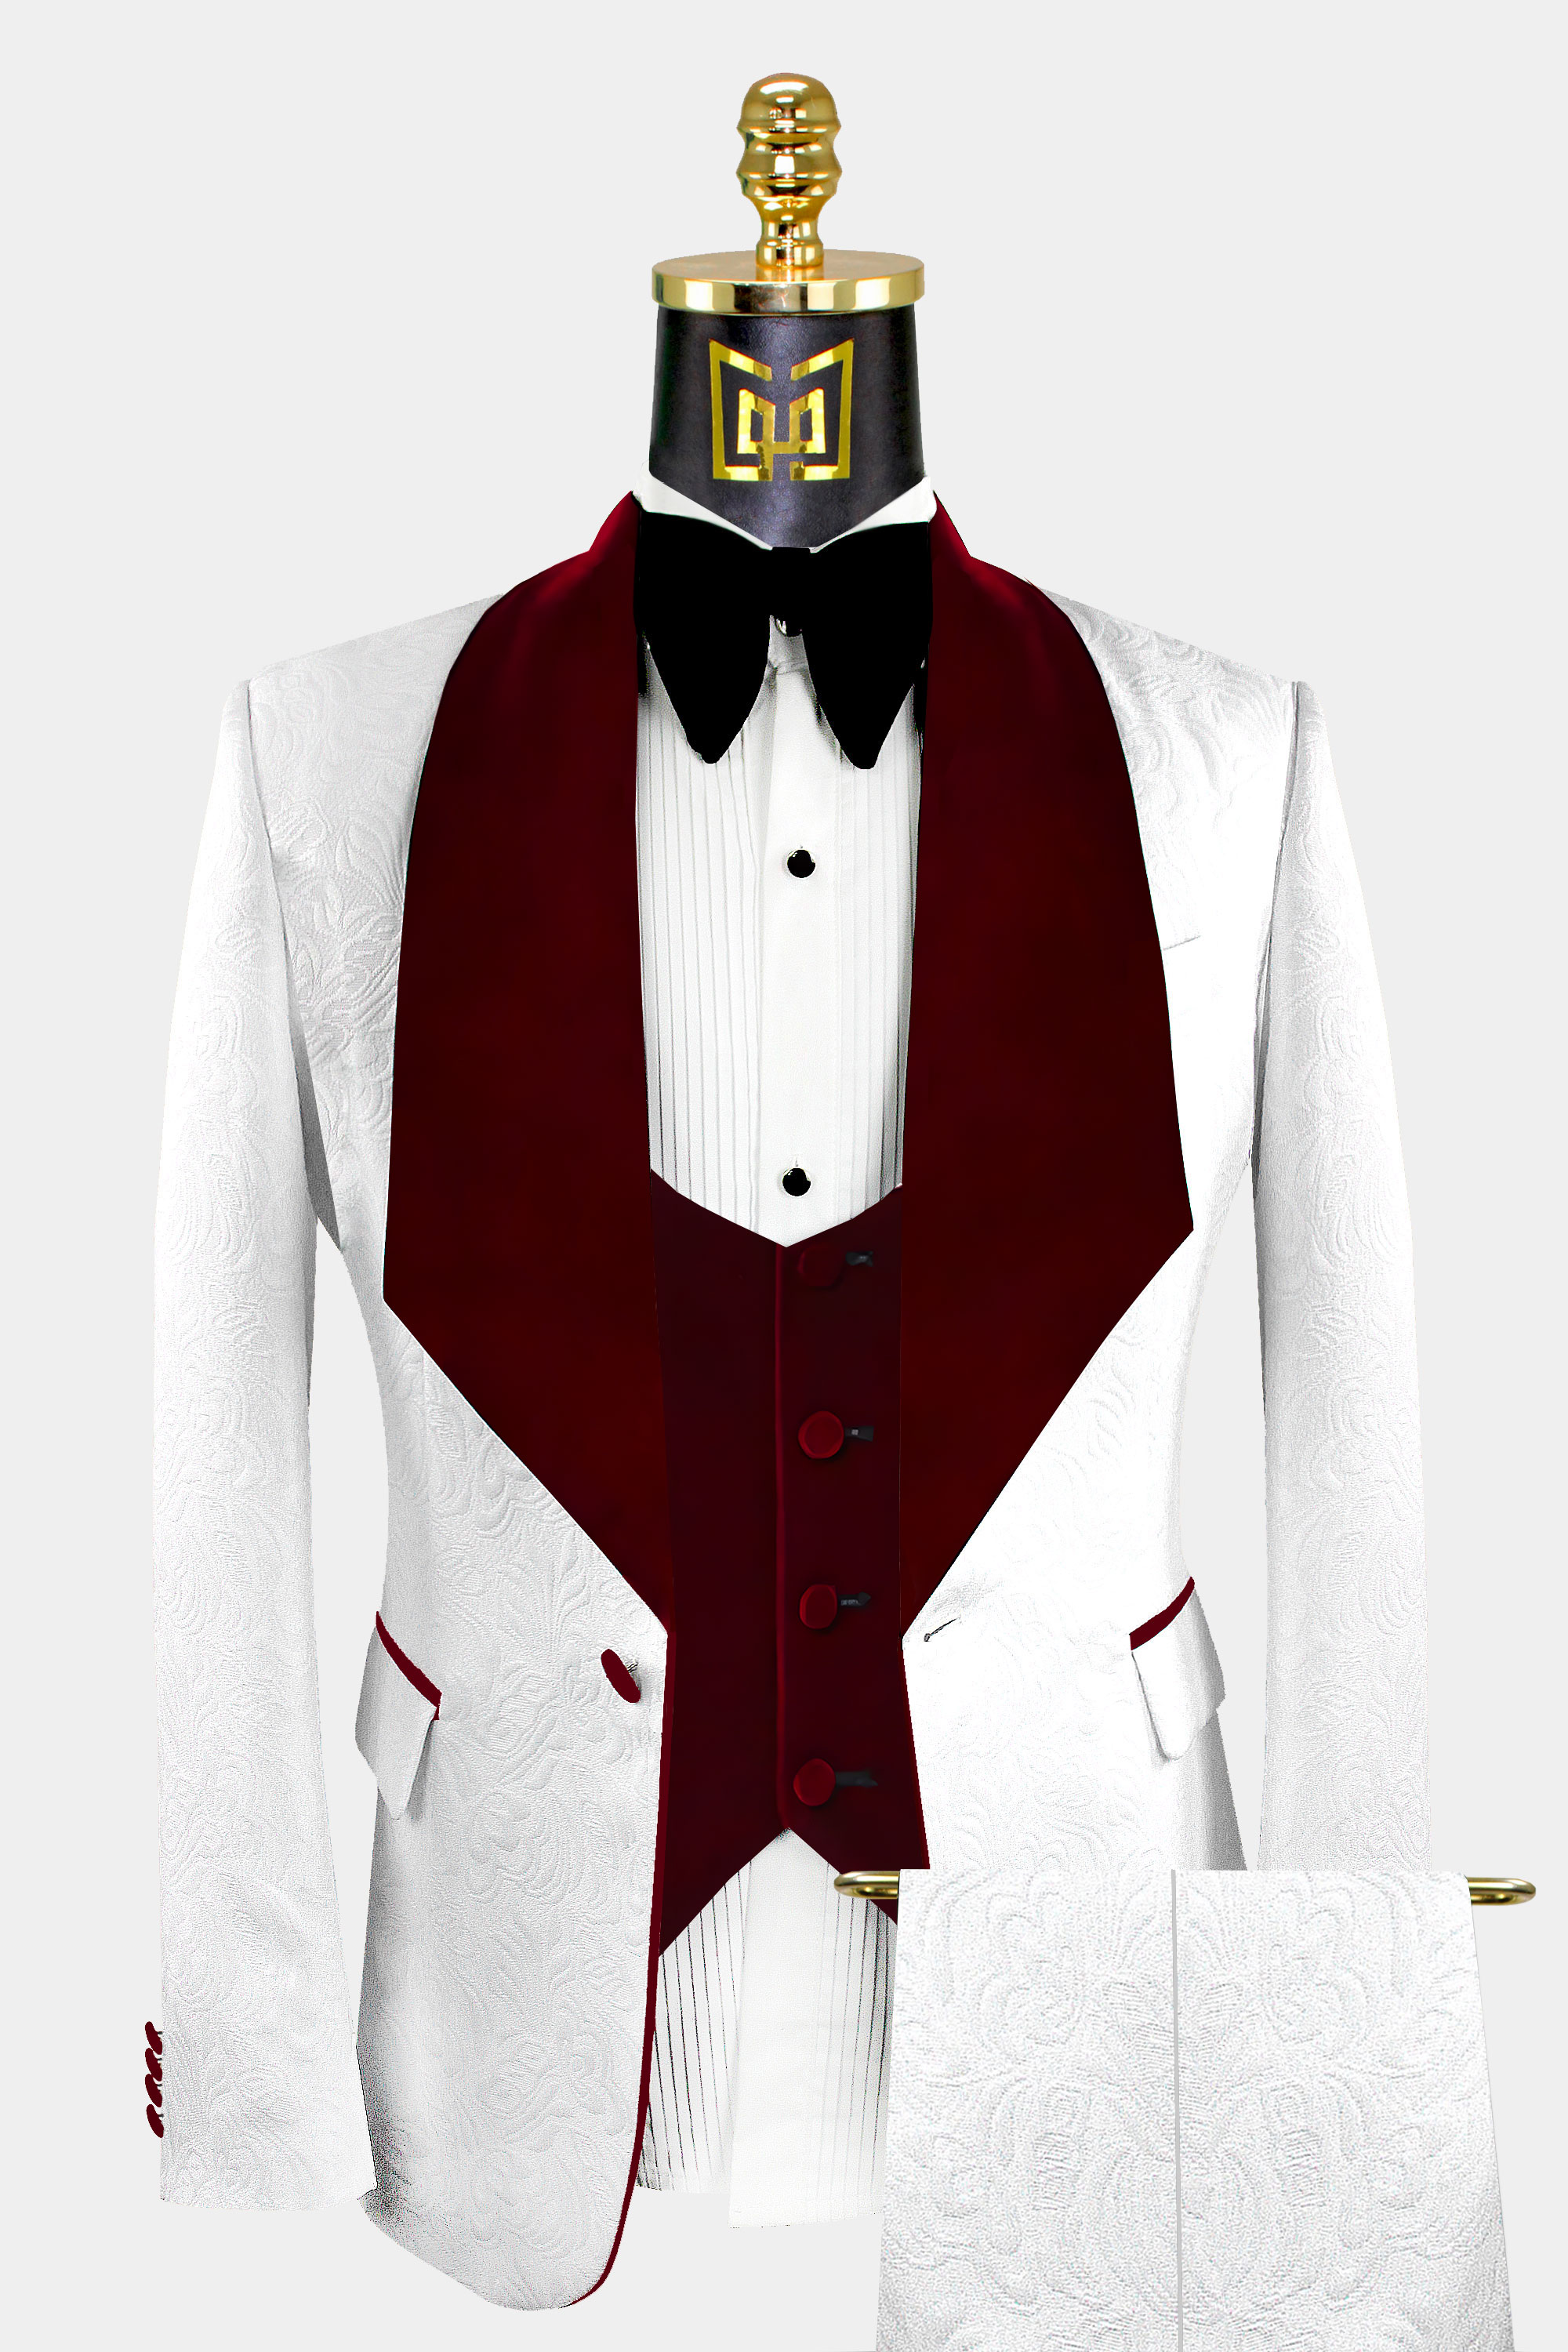 Burgundy Men Suit Notch Lapel Groom Tuxedo Formal Wedding Party Prom Suit  Custom